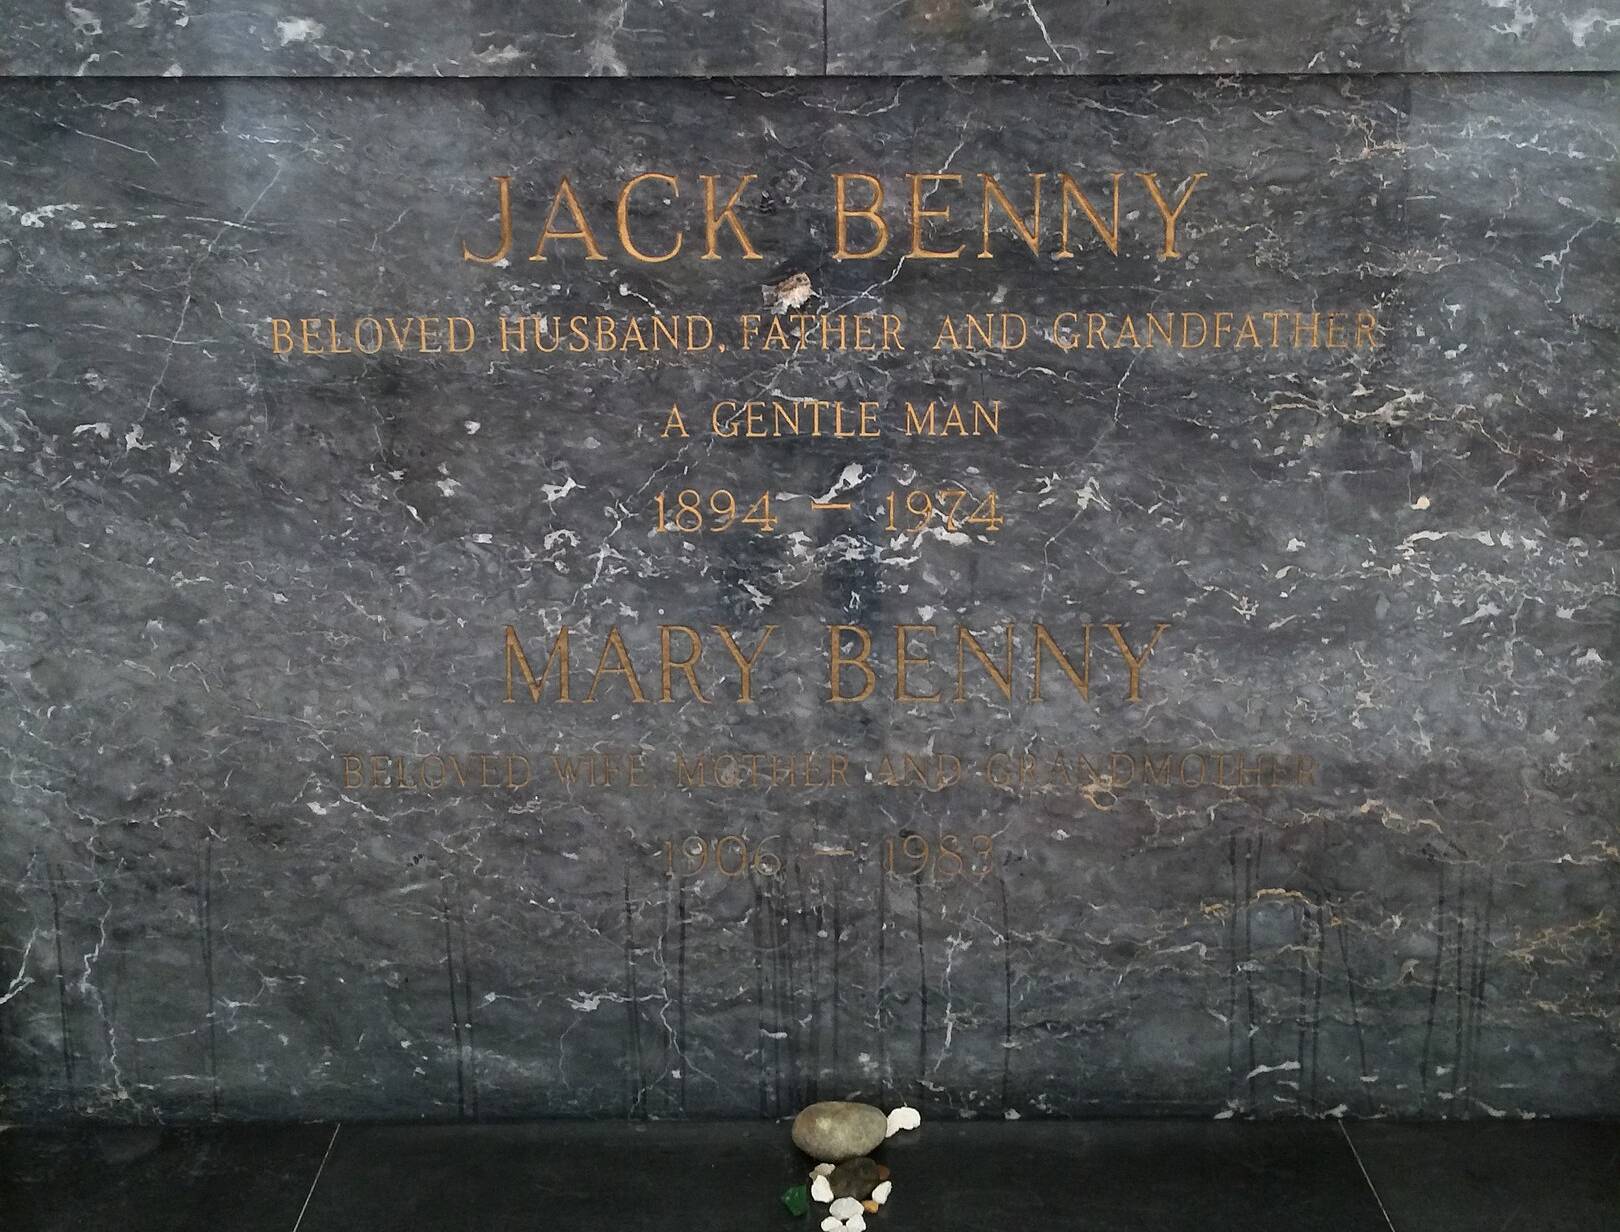 Jack Benny facts